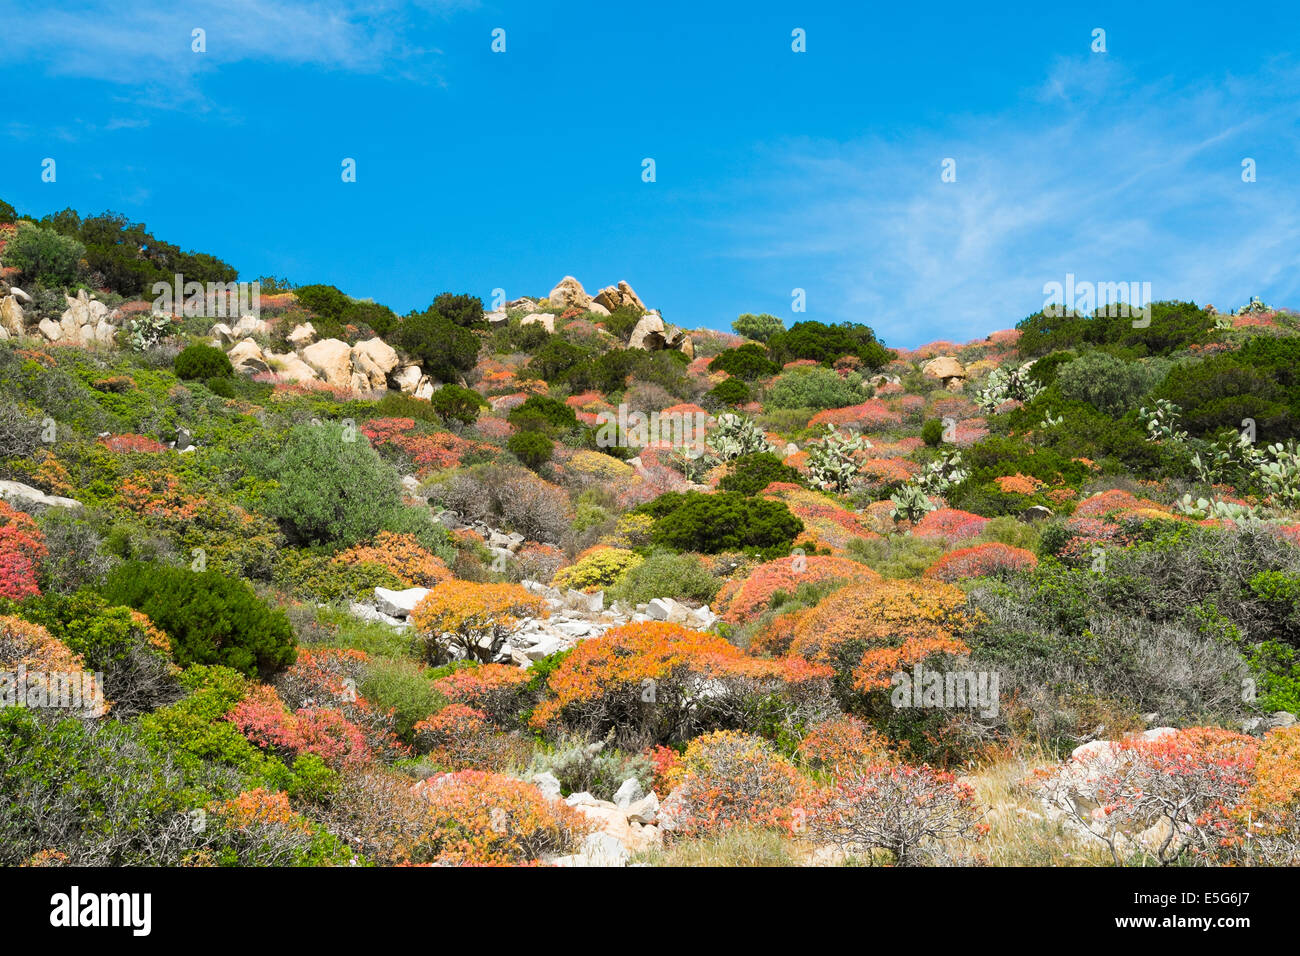 Mediterranean vegetation in spring in Villasimius, Sardinia, Italy Stock Photo